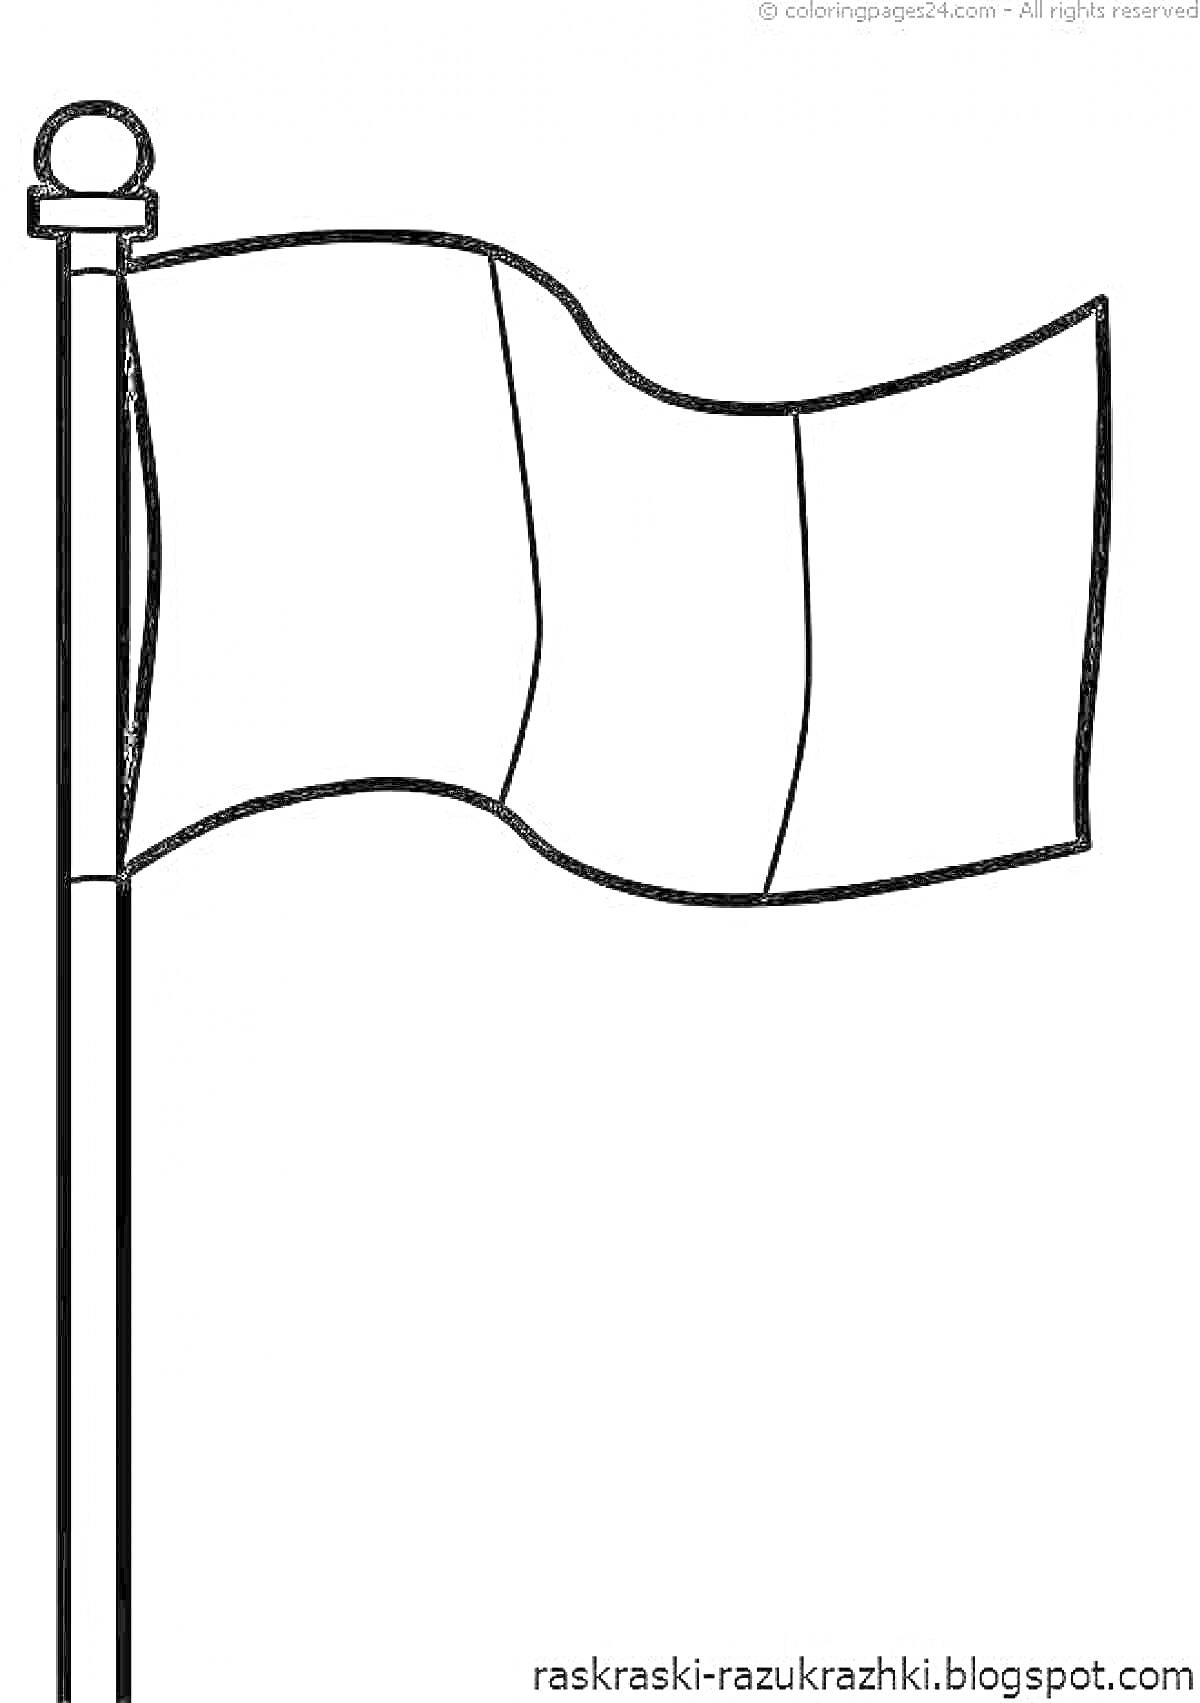 Раскраска Раскраска флаг Франции на флагштоке